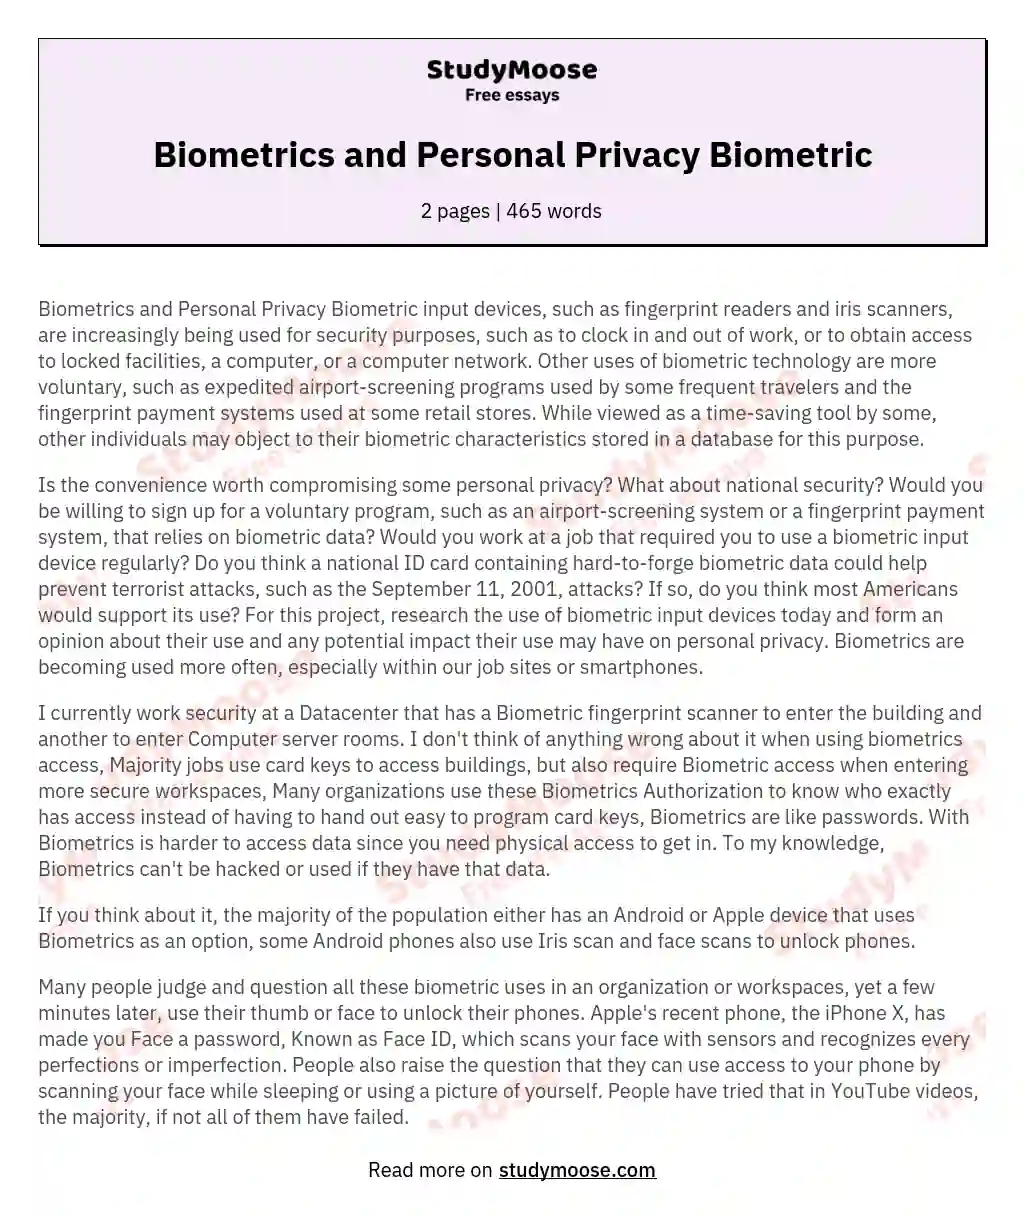 Biometrics and Personal Privacy Biometric